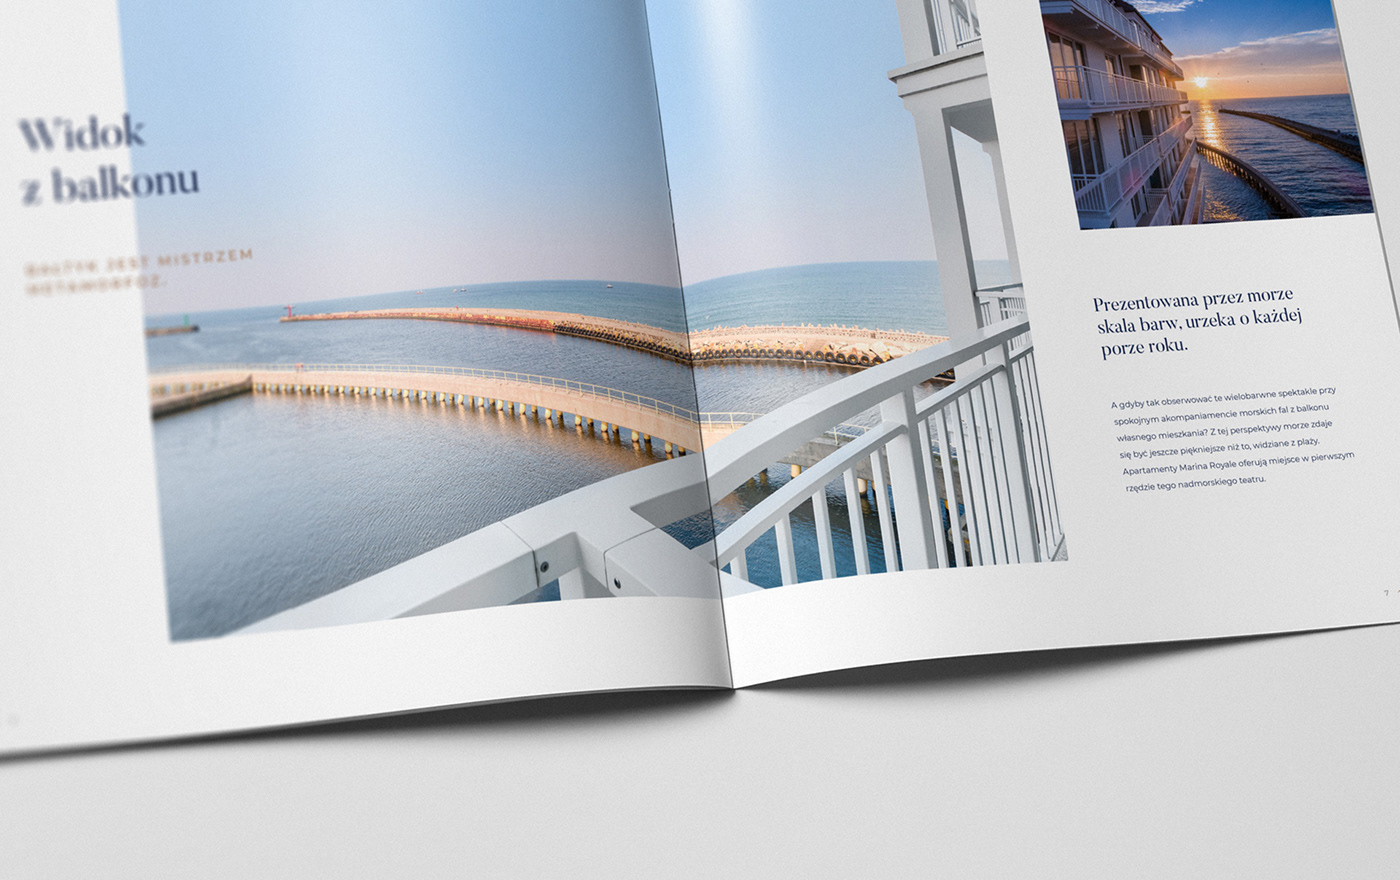 sea navy poland gold marina apartments developer invesment Catalogue print